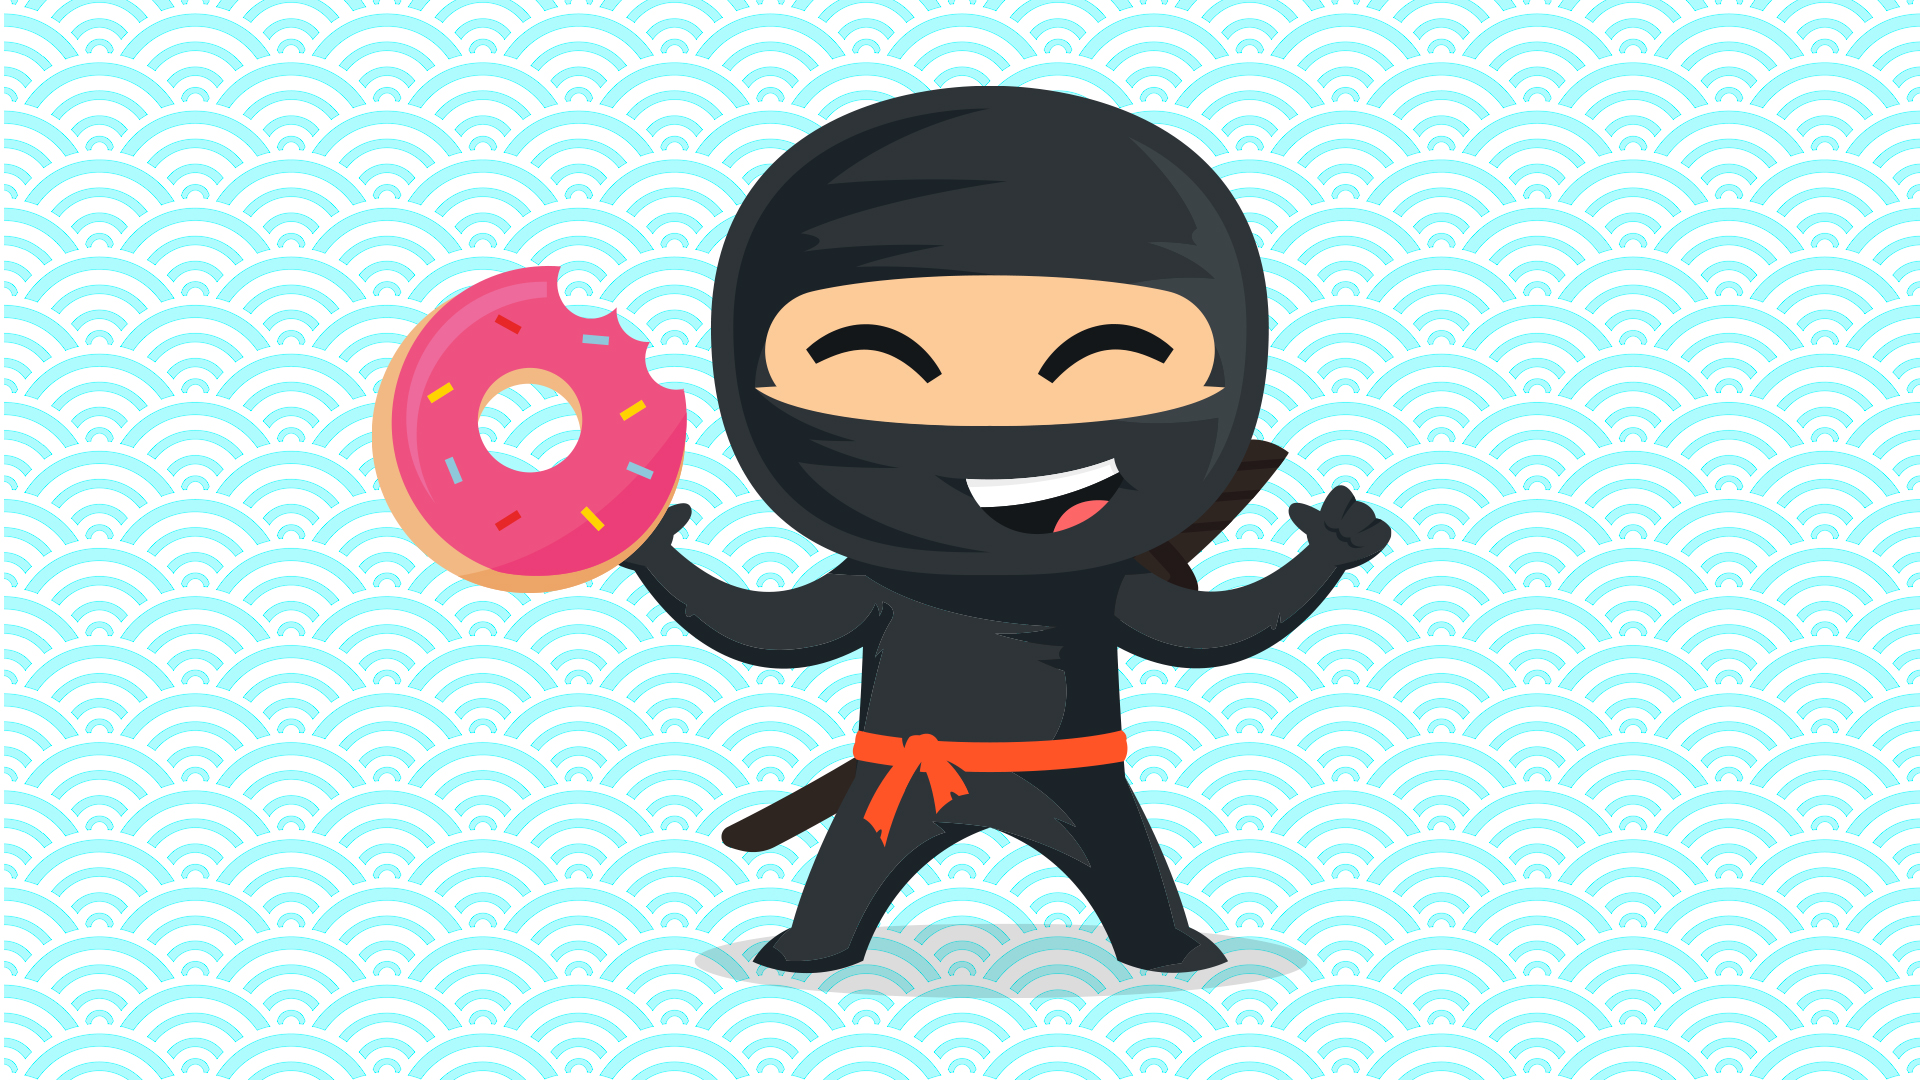 Cartoon ninja holding a doughnut on a blue background